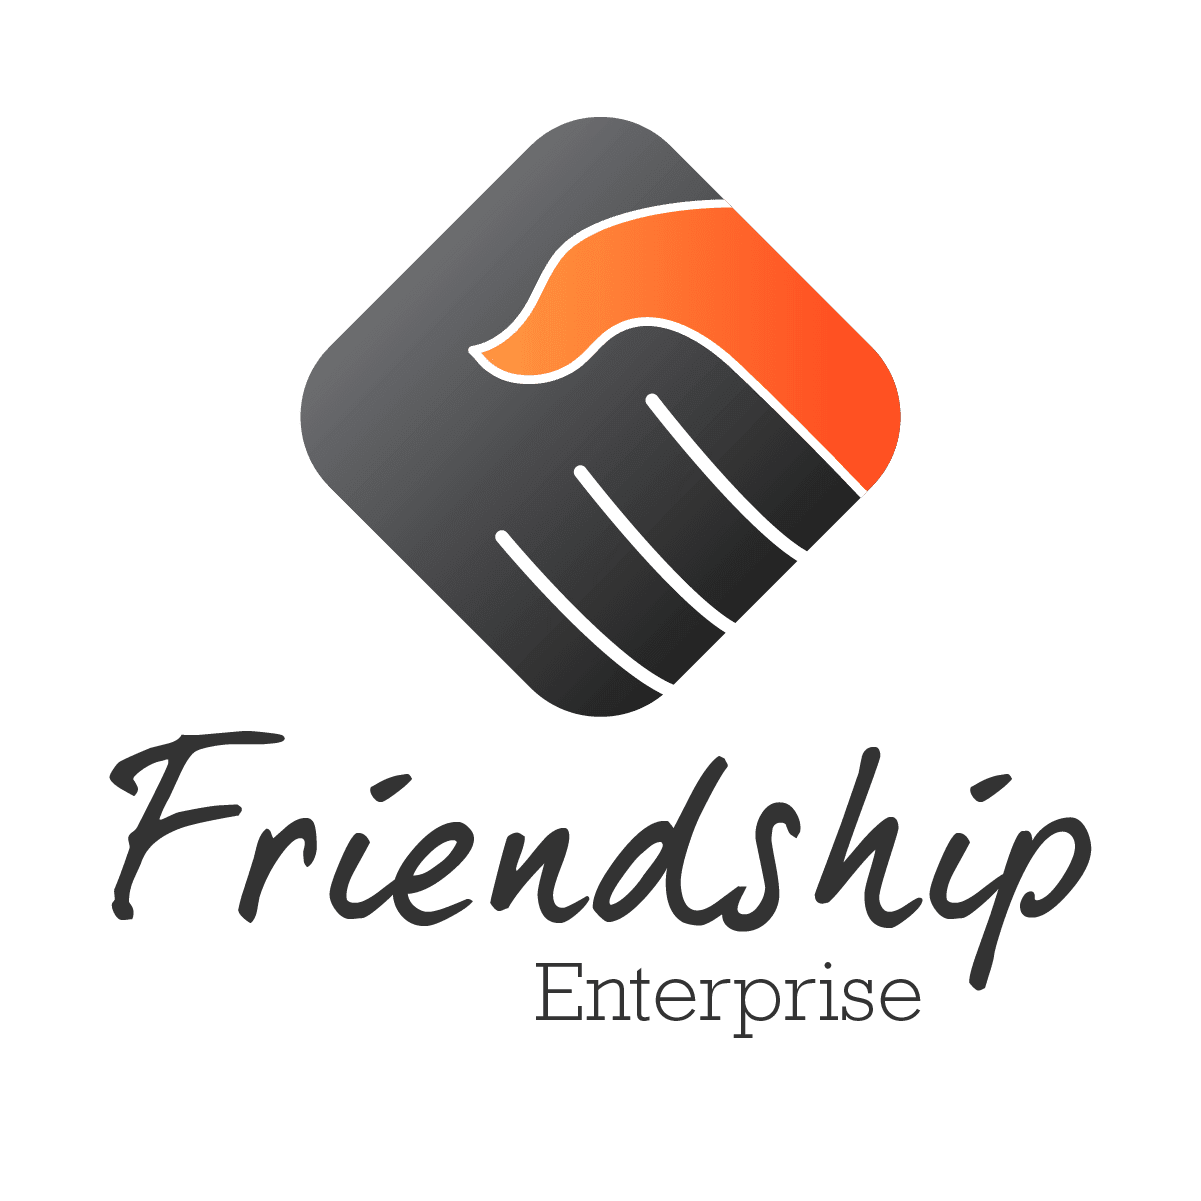 Friendship Enterprise